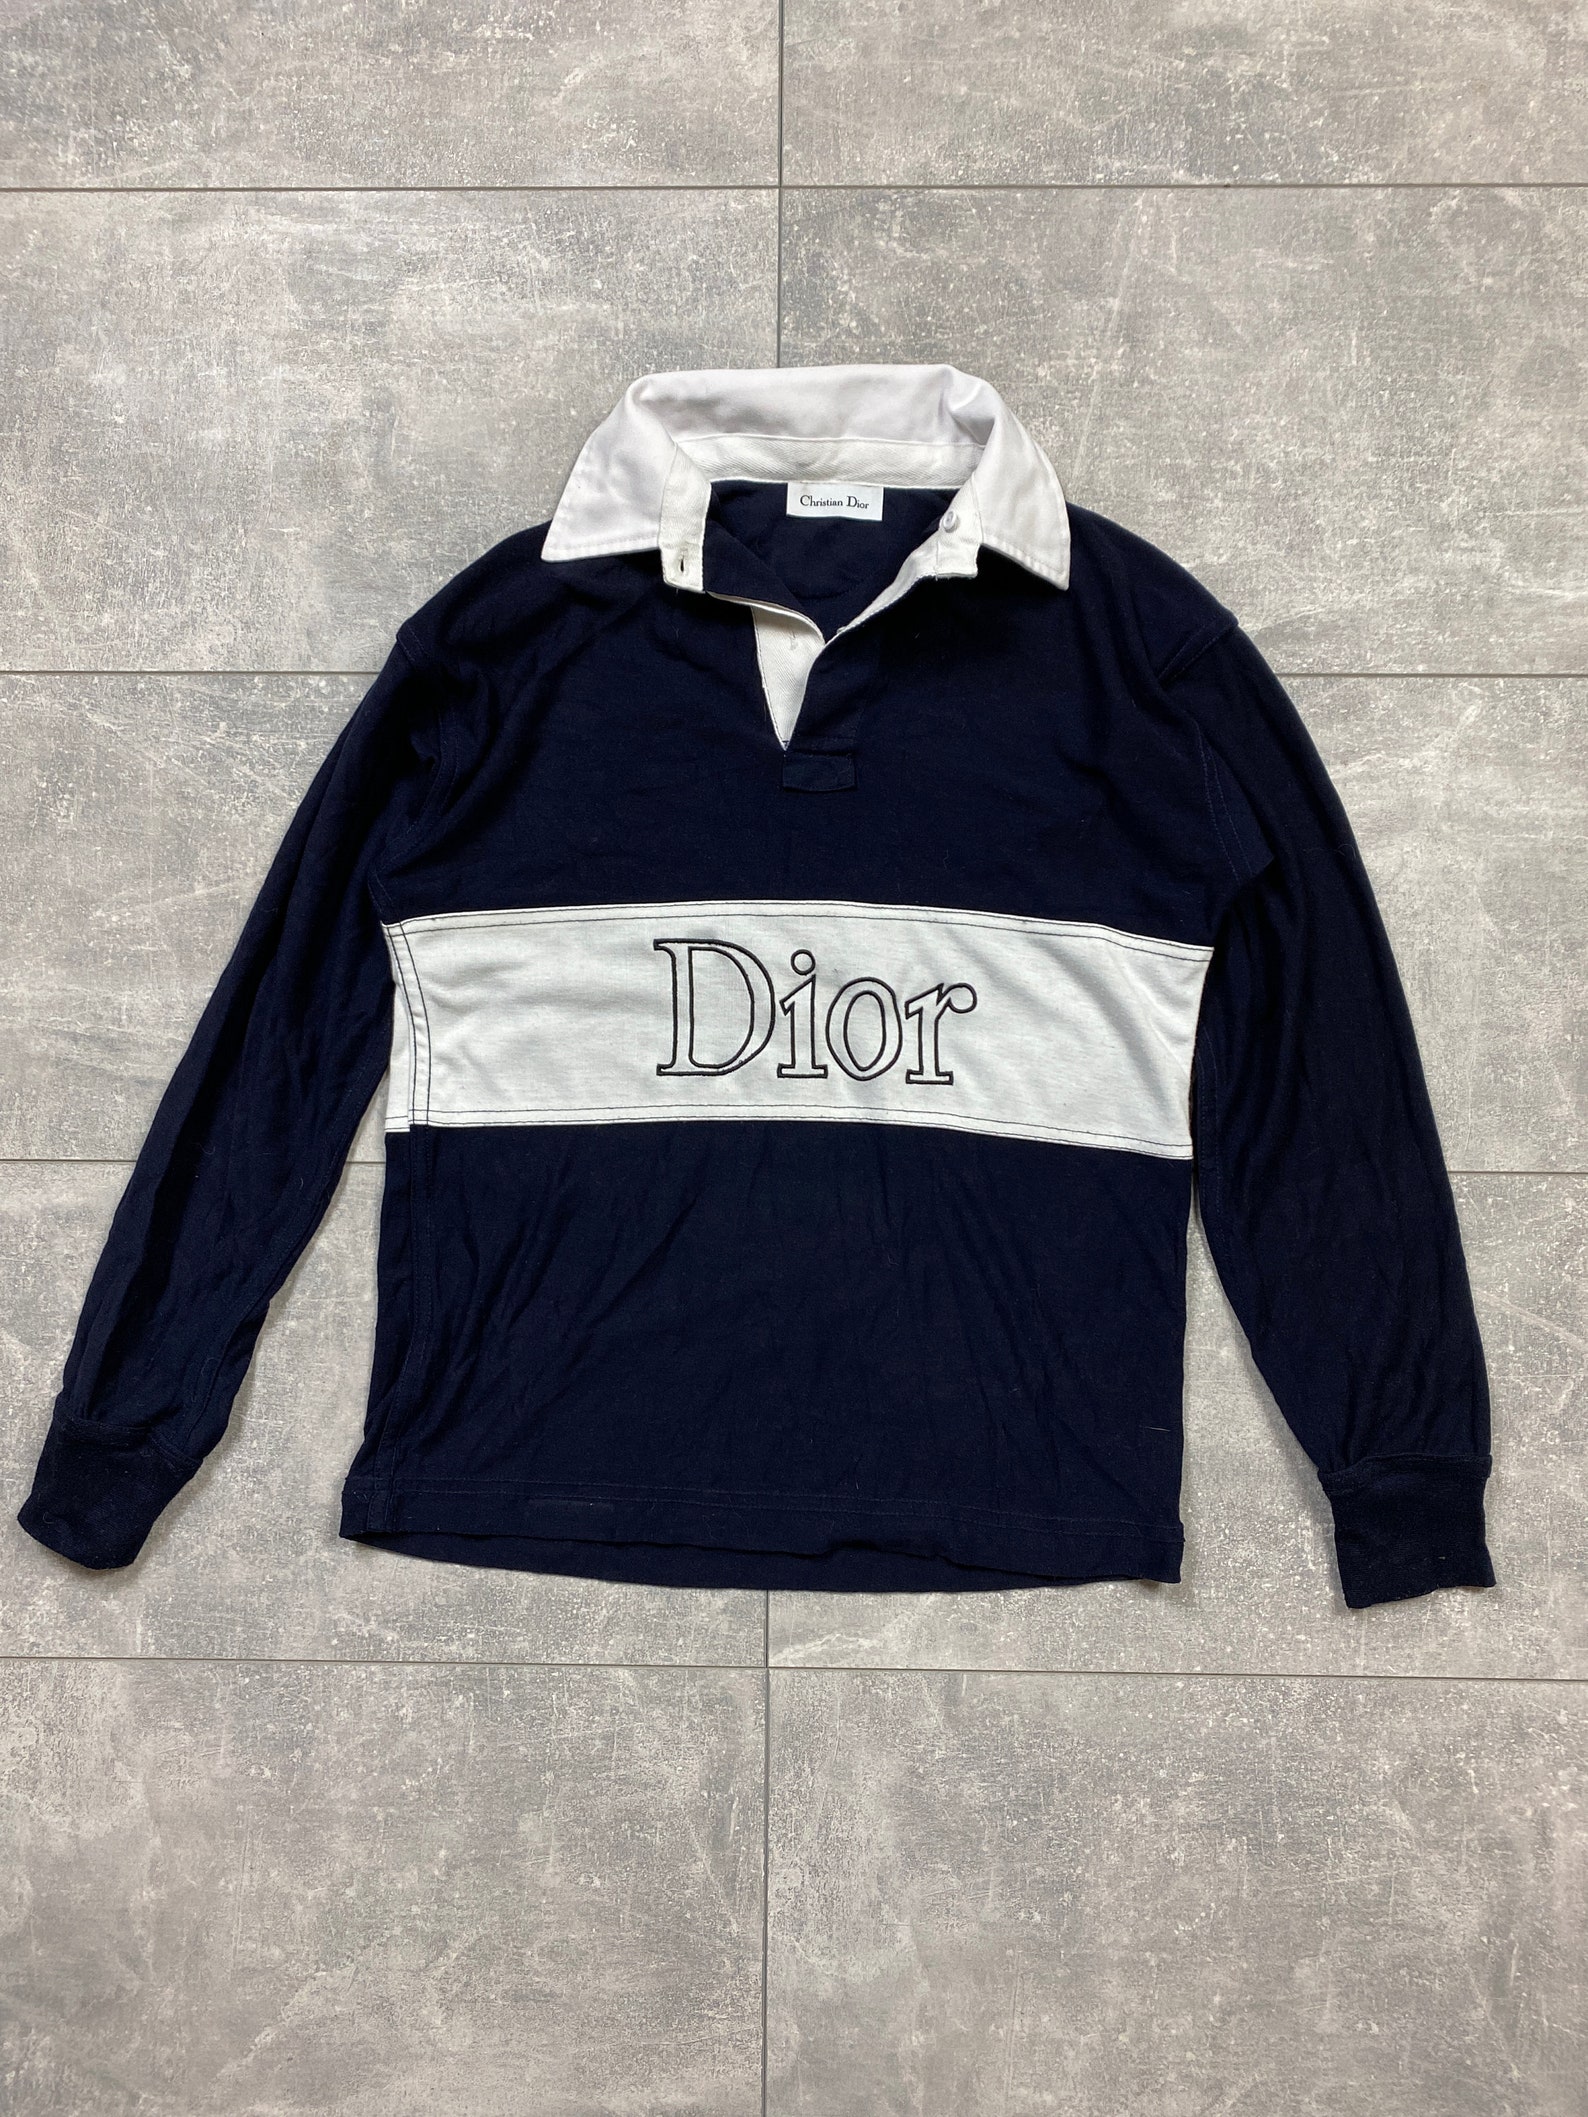 Rare Christian Dior sweatshirt Atelier hoodie pullover | Etsy